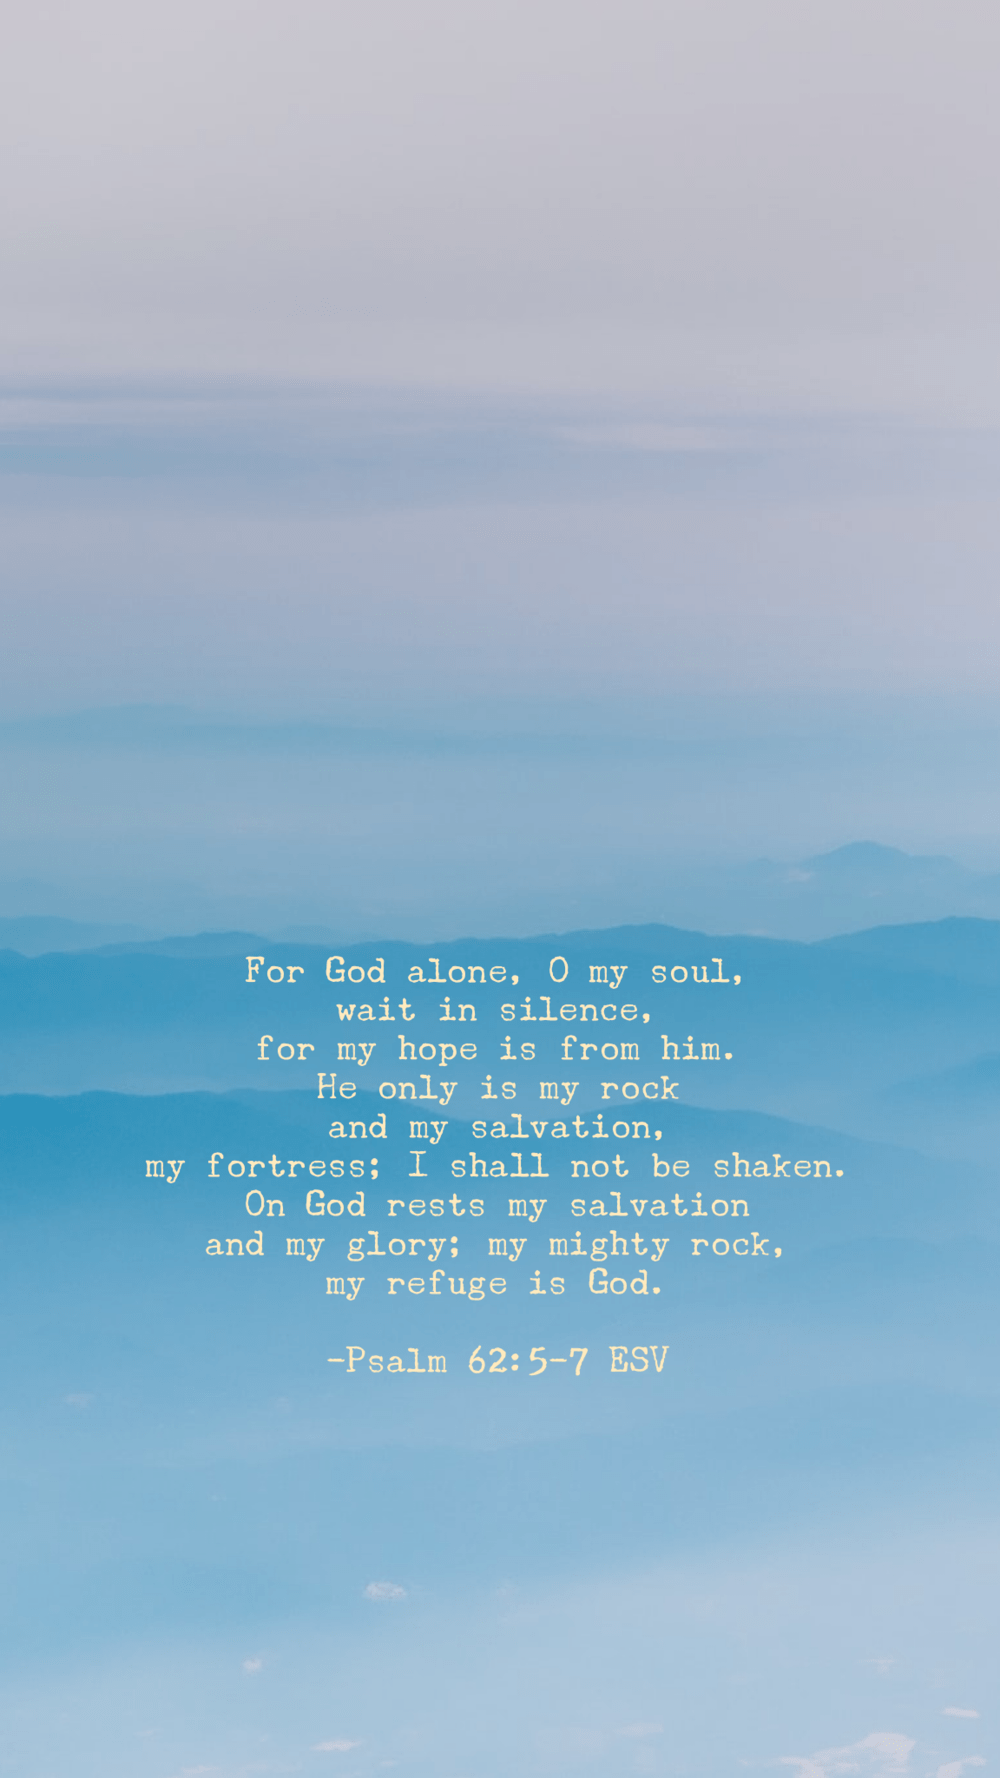 A poem is written on the sky - Bible